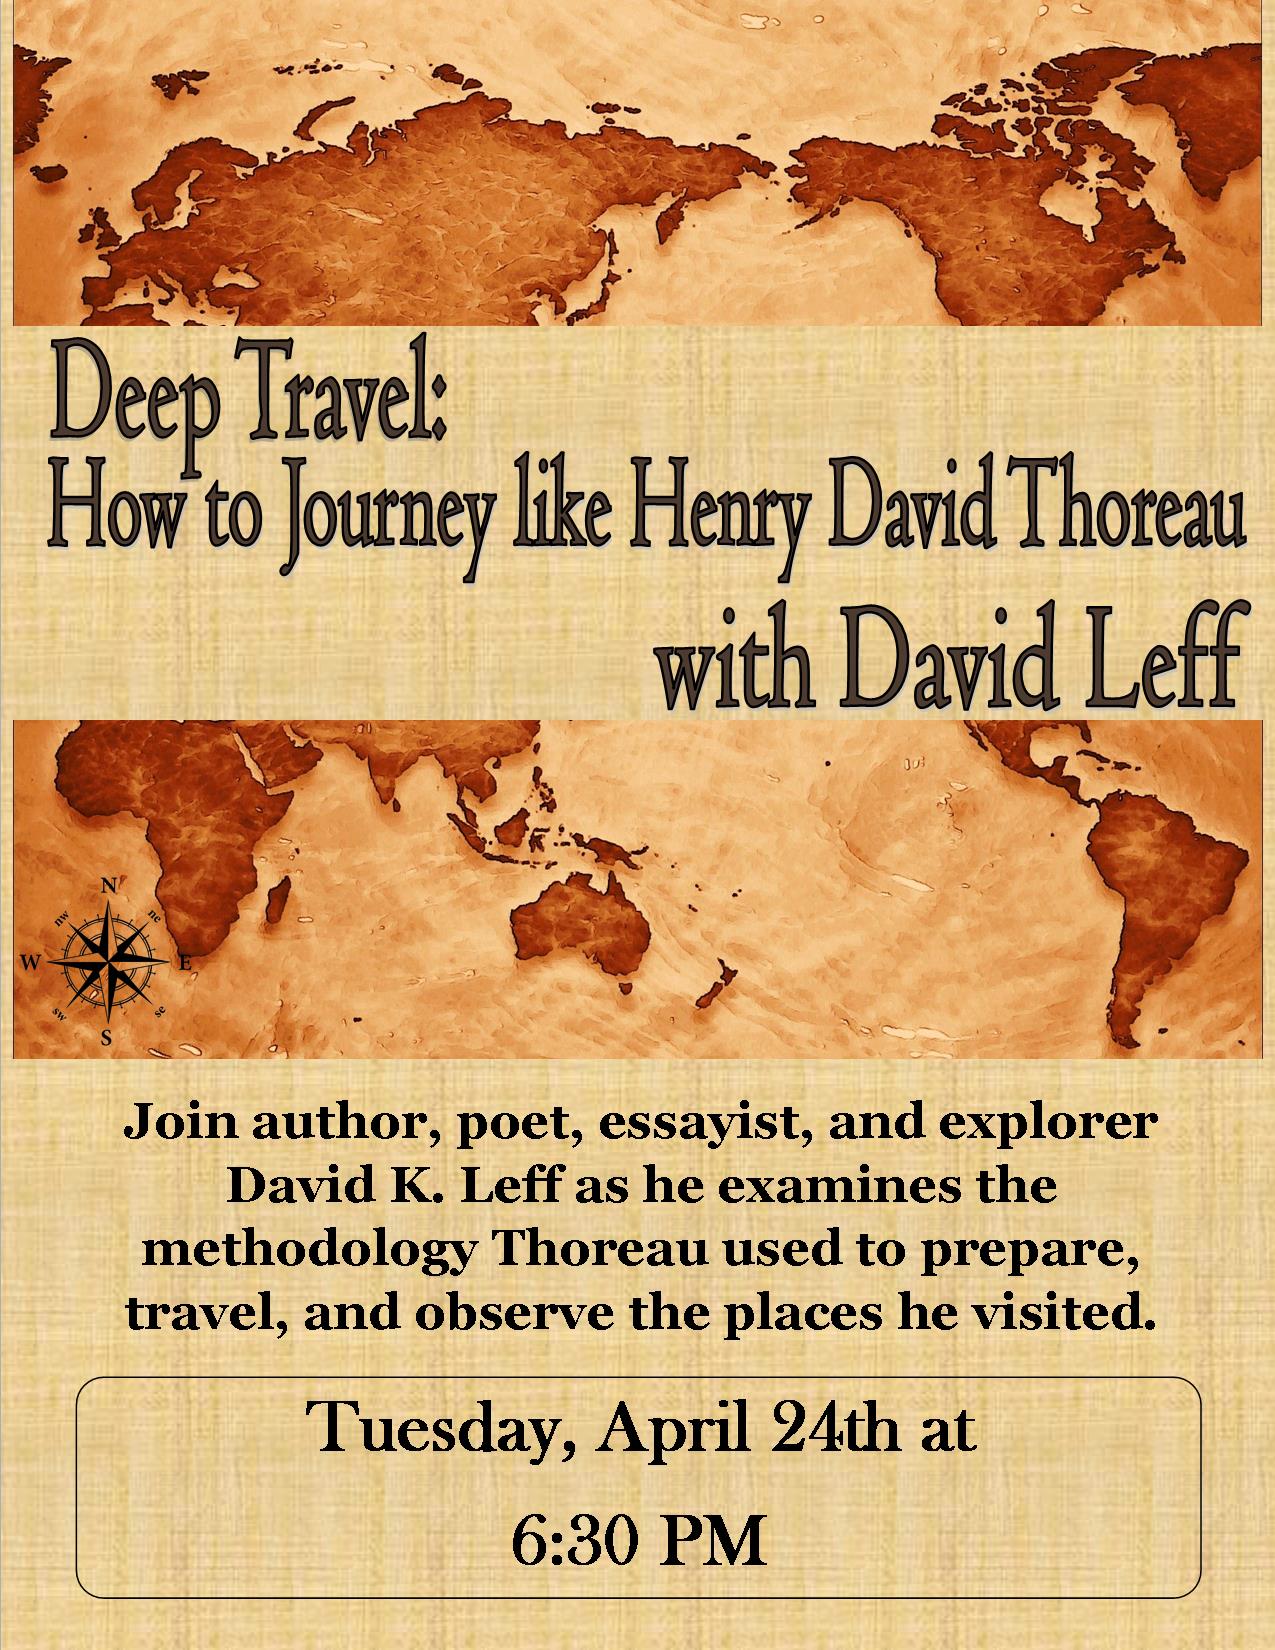 "Deep Travel: How to Journey like Henry David Thoreau" with David Leff